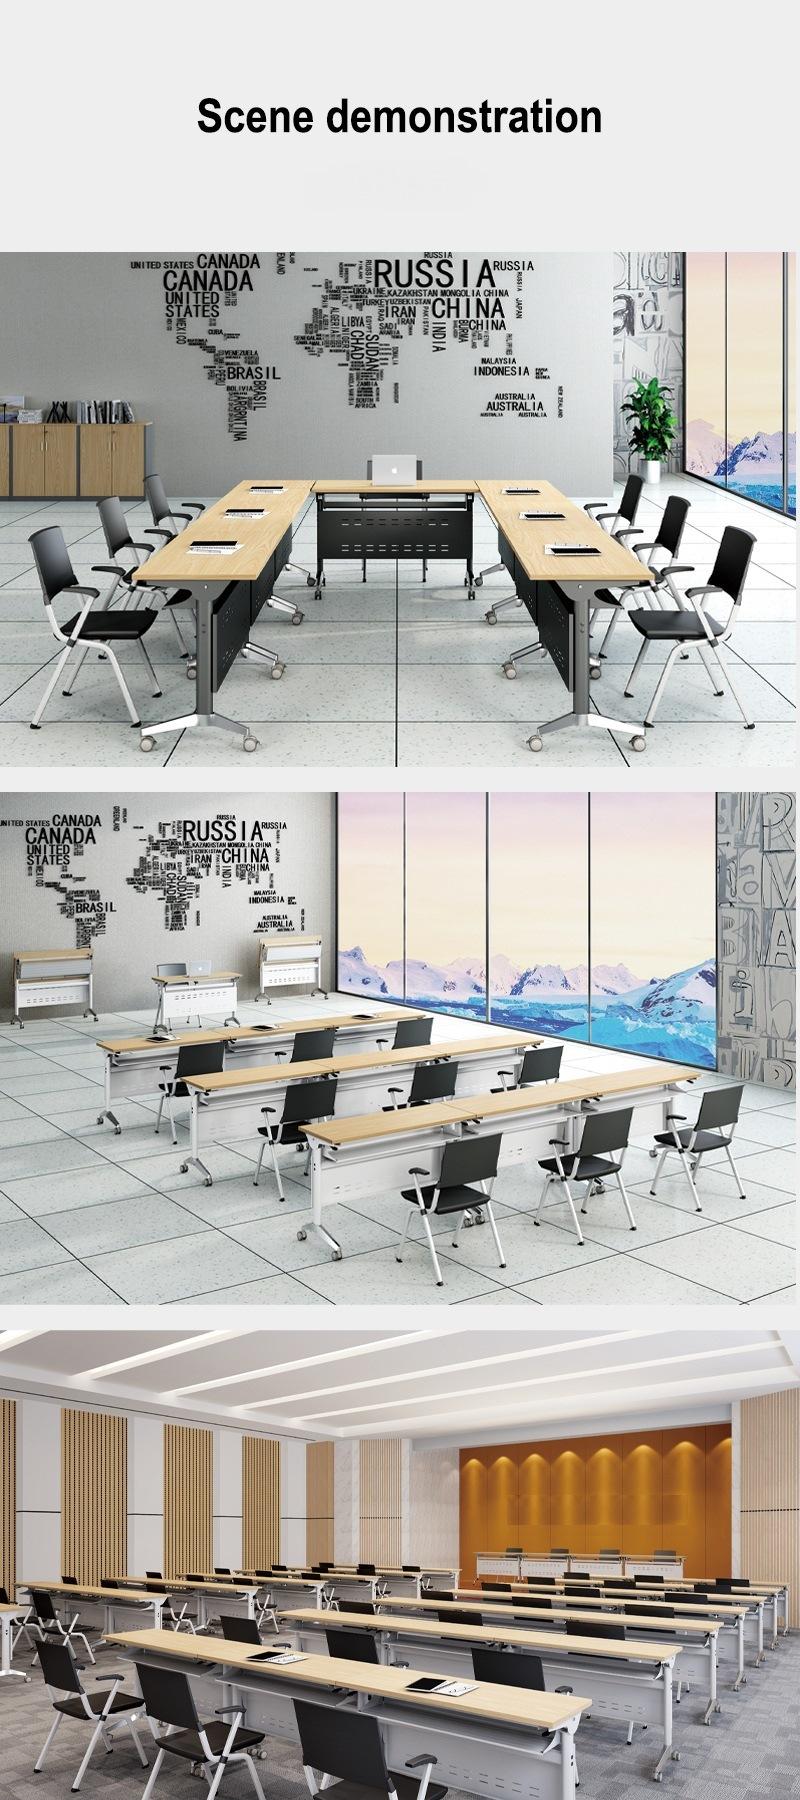 Elites Modern Office Classroom Height Adjustable Computer Desk Study Desk Training Table